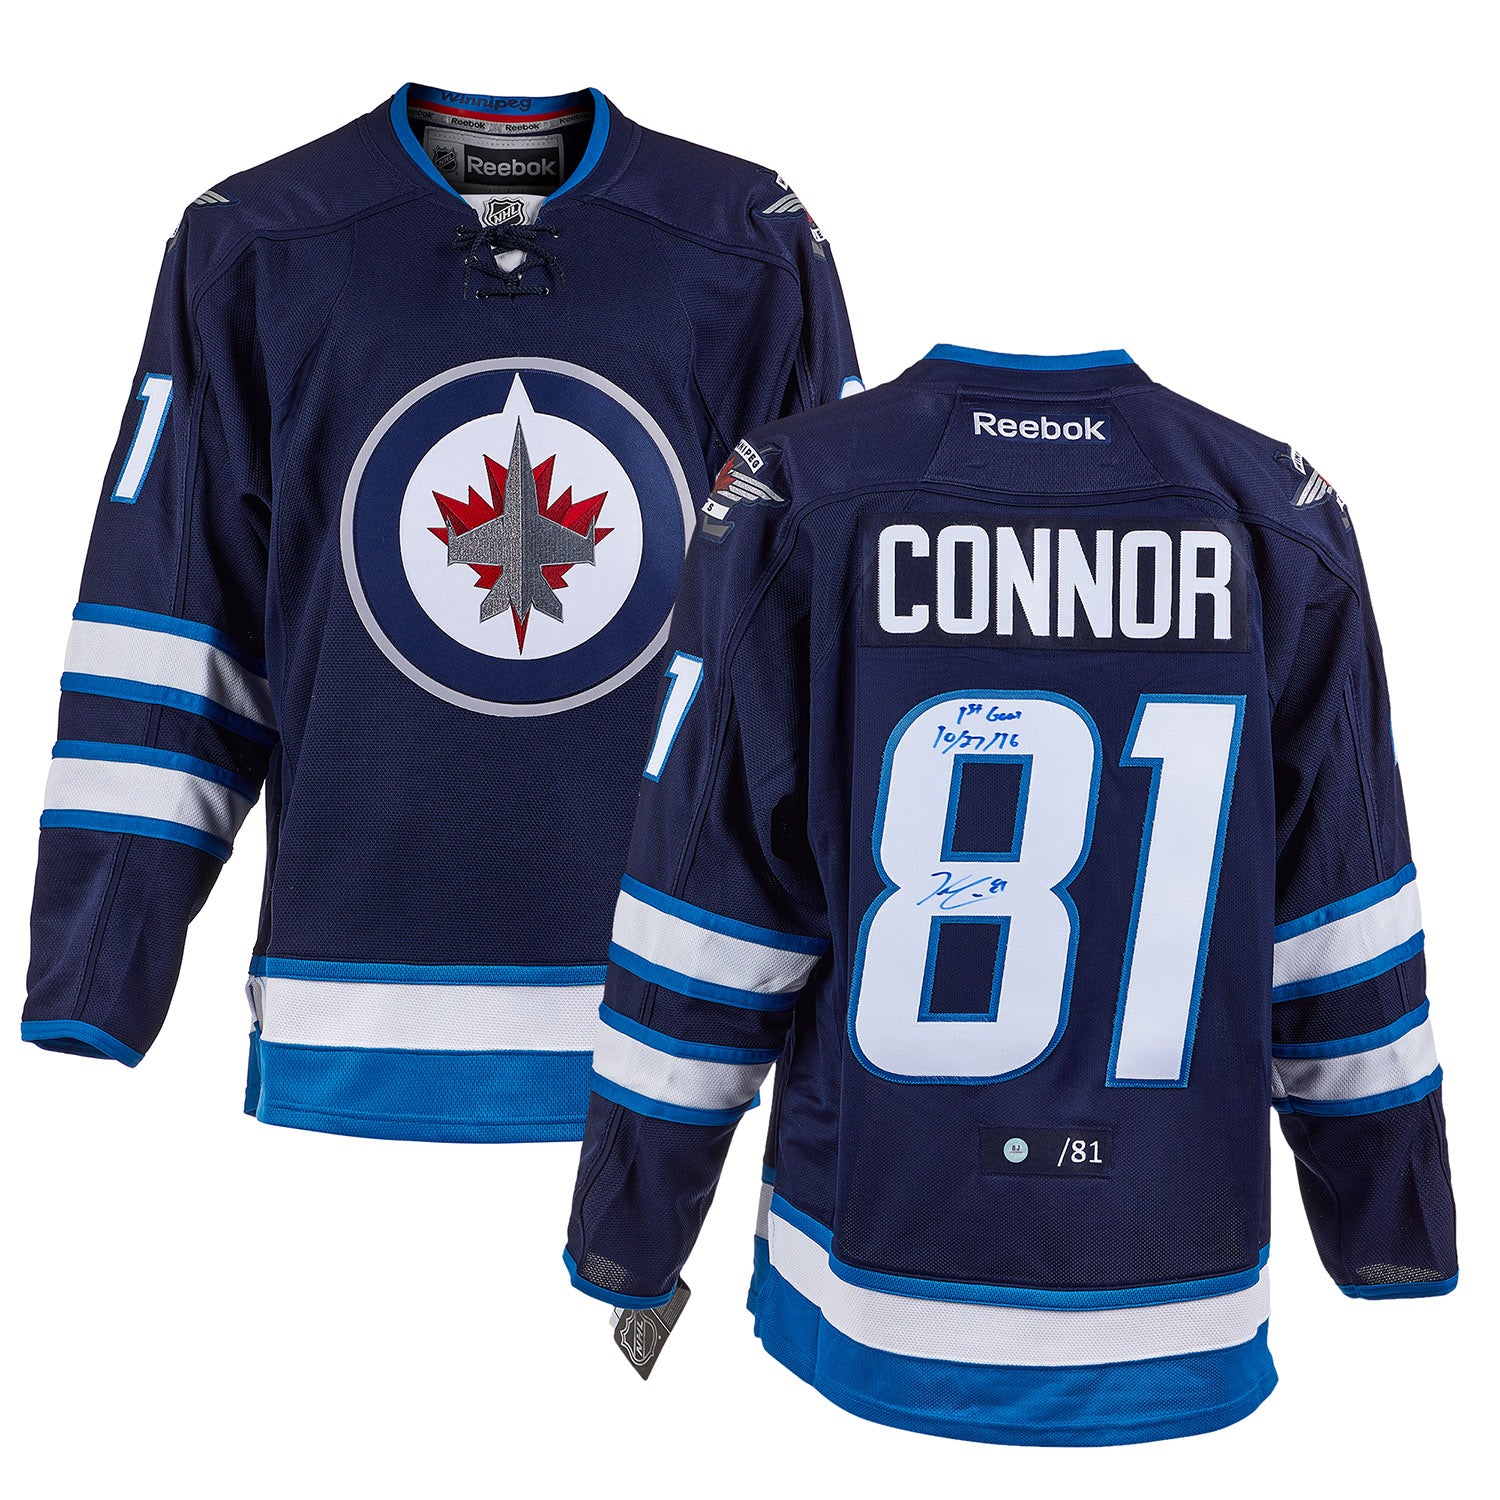 Kyle Connor Winnipeg Jets Signed & Dated 1st Goal Reebok Jersey #/81